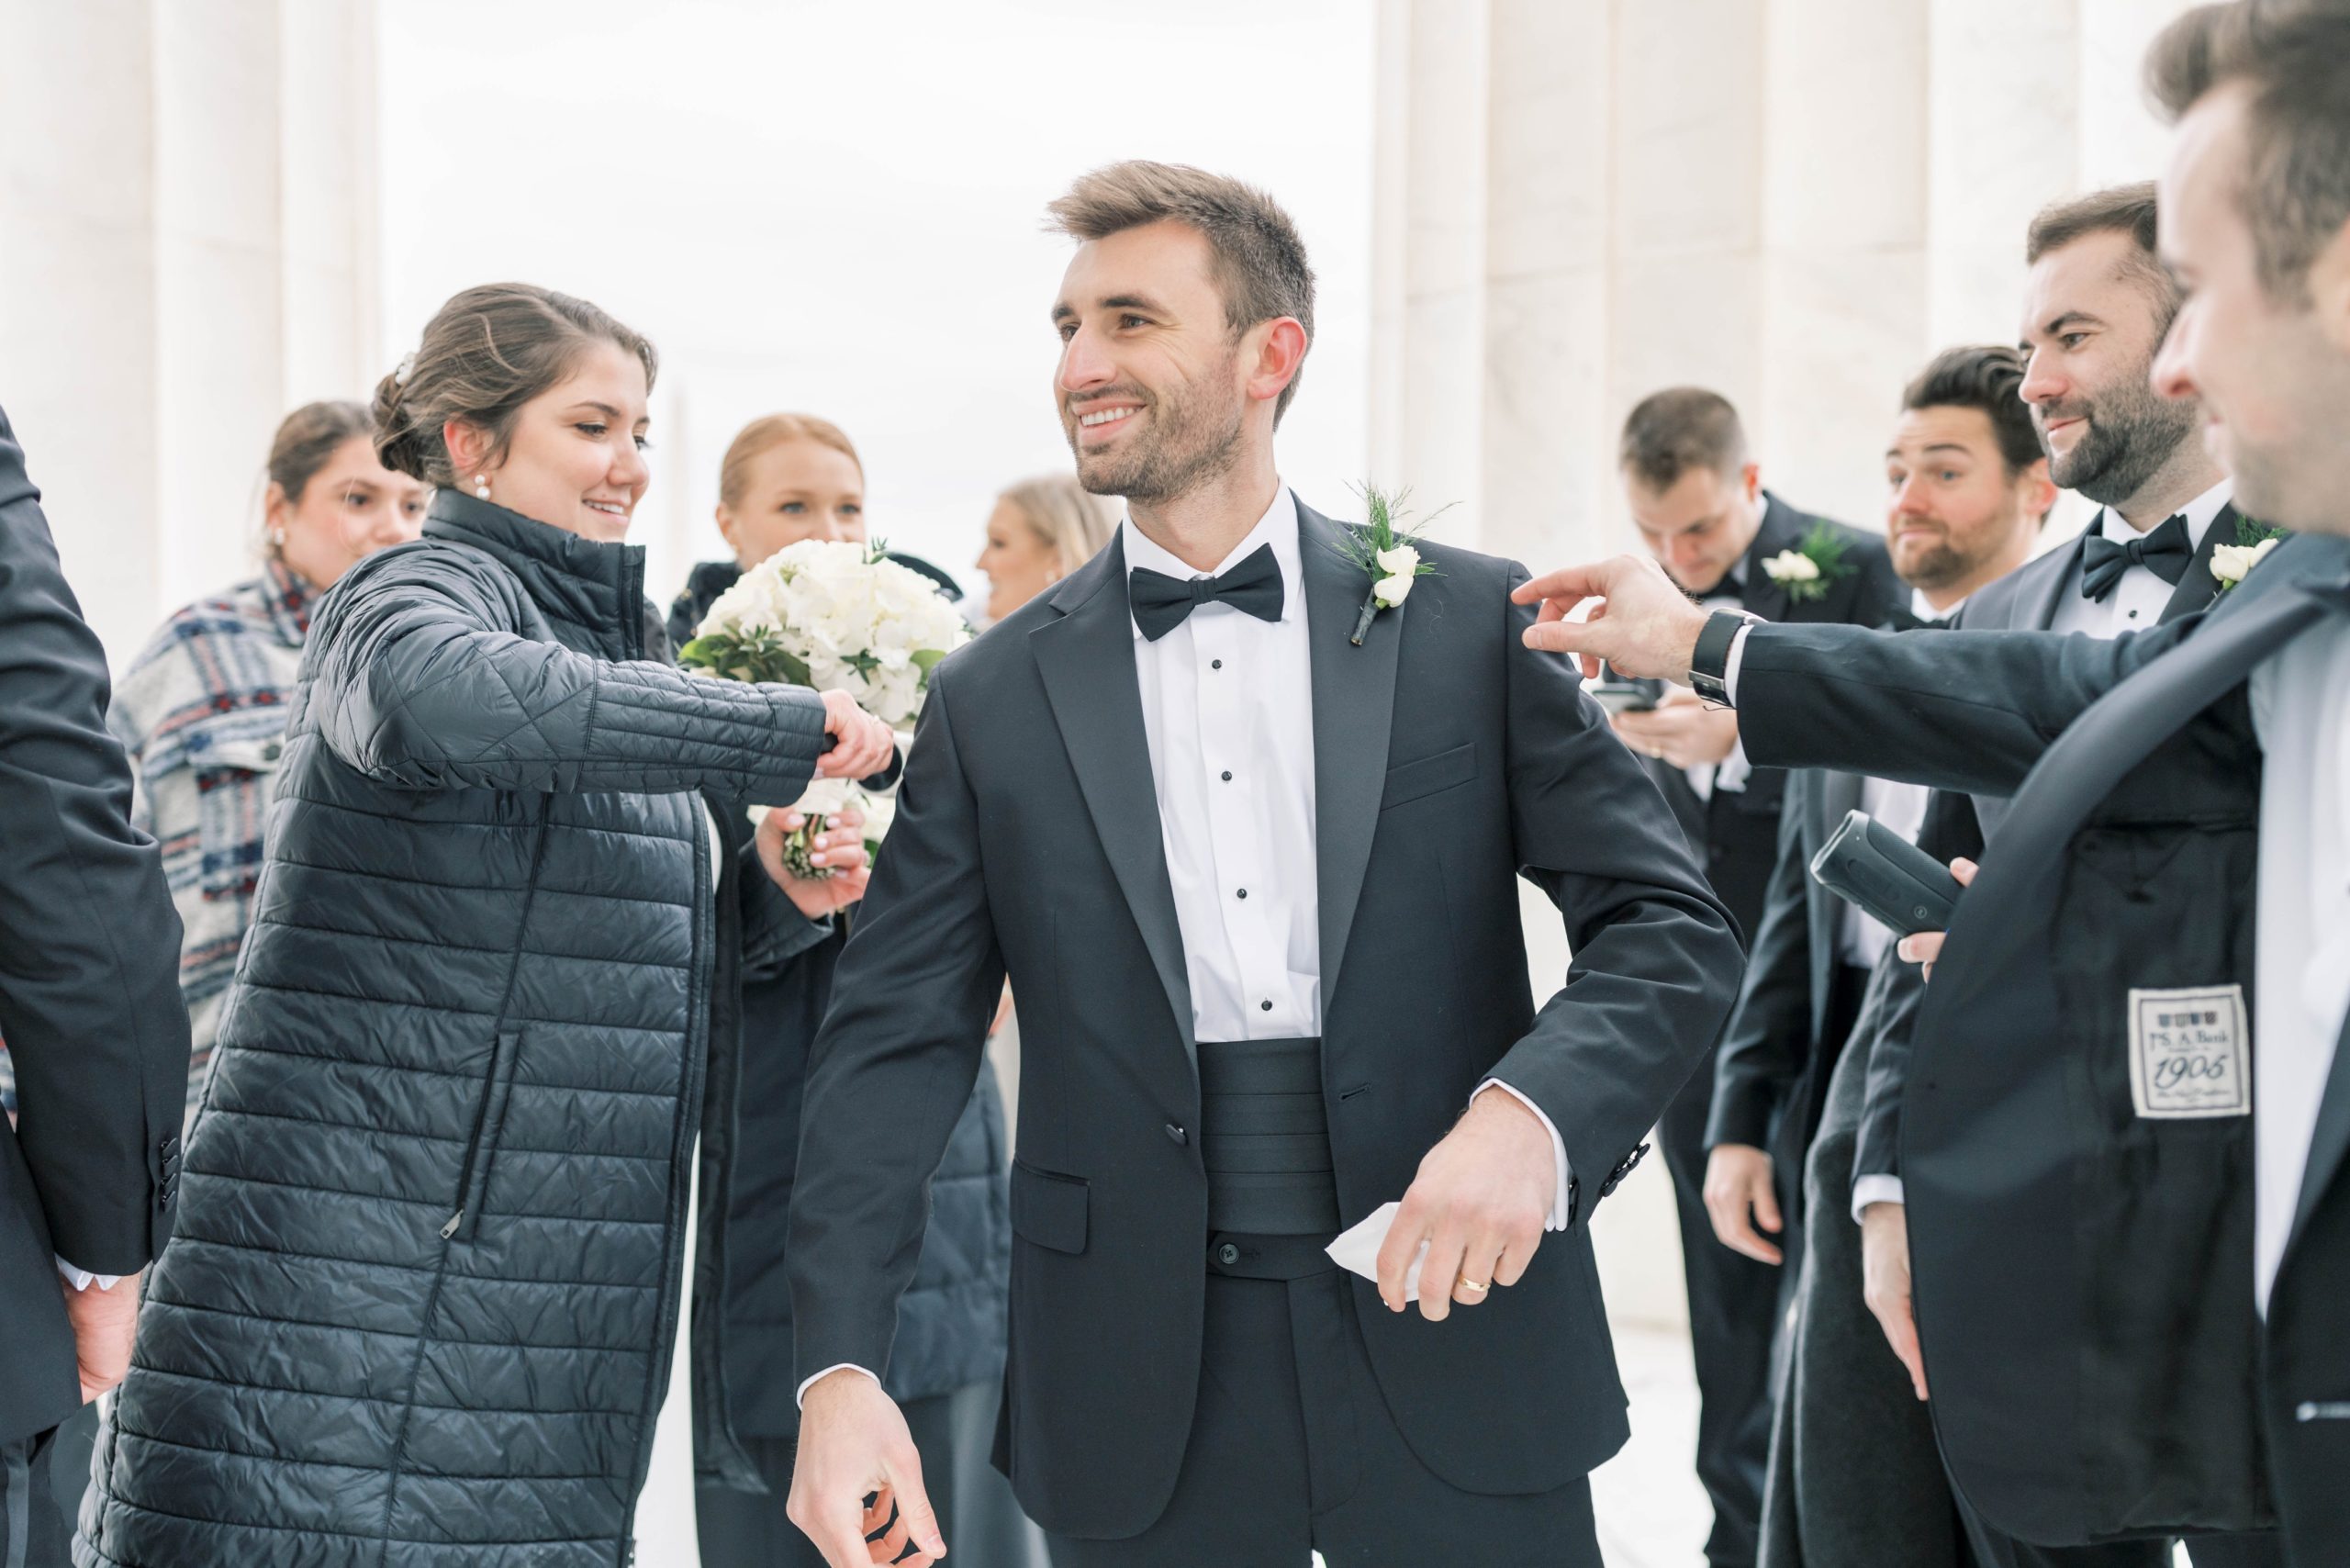 An elegant wintry wedding at the Mayflower Hotel in Washington, DC.